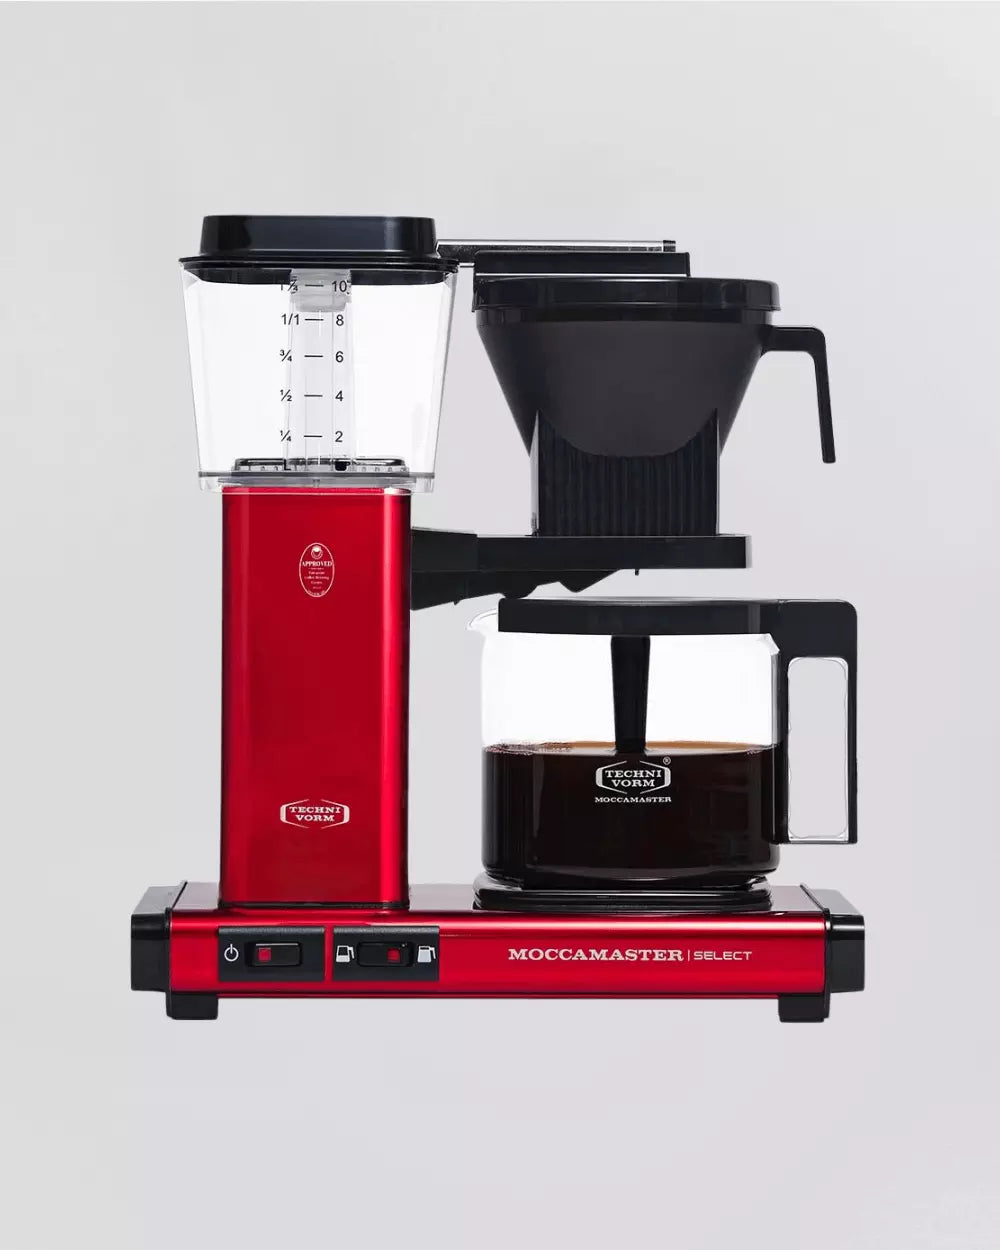 – Select Rubiac Moccamaster Kaffeemaschine KBG